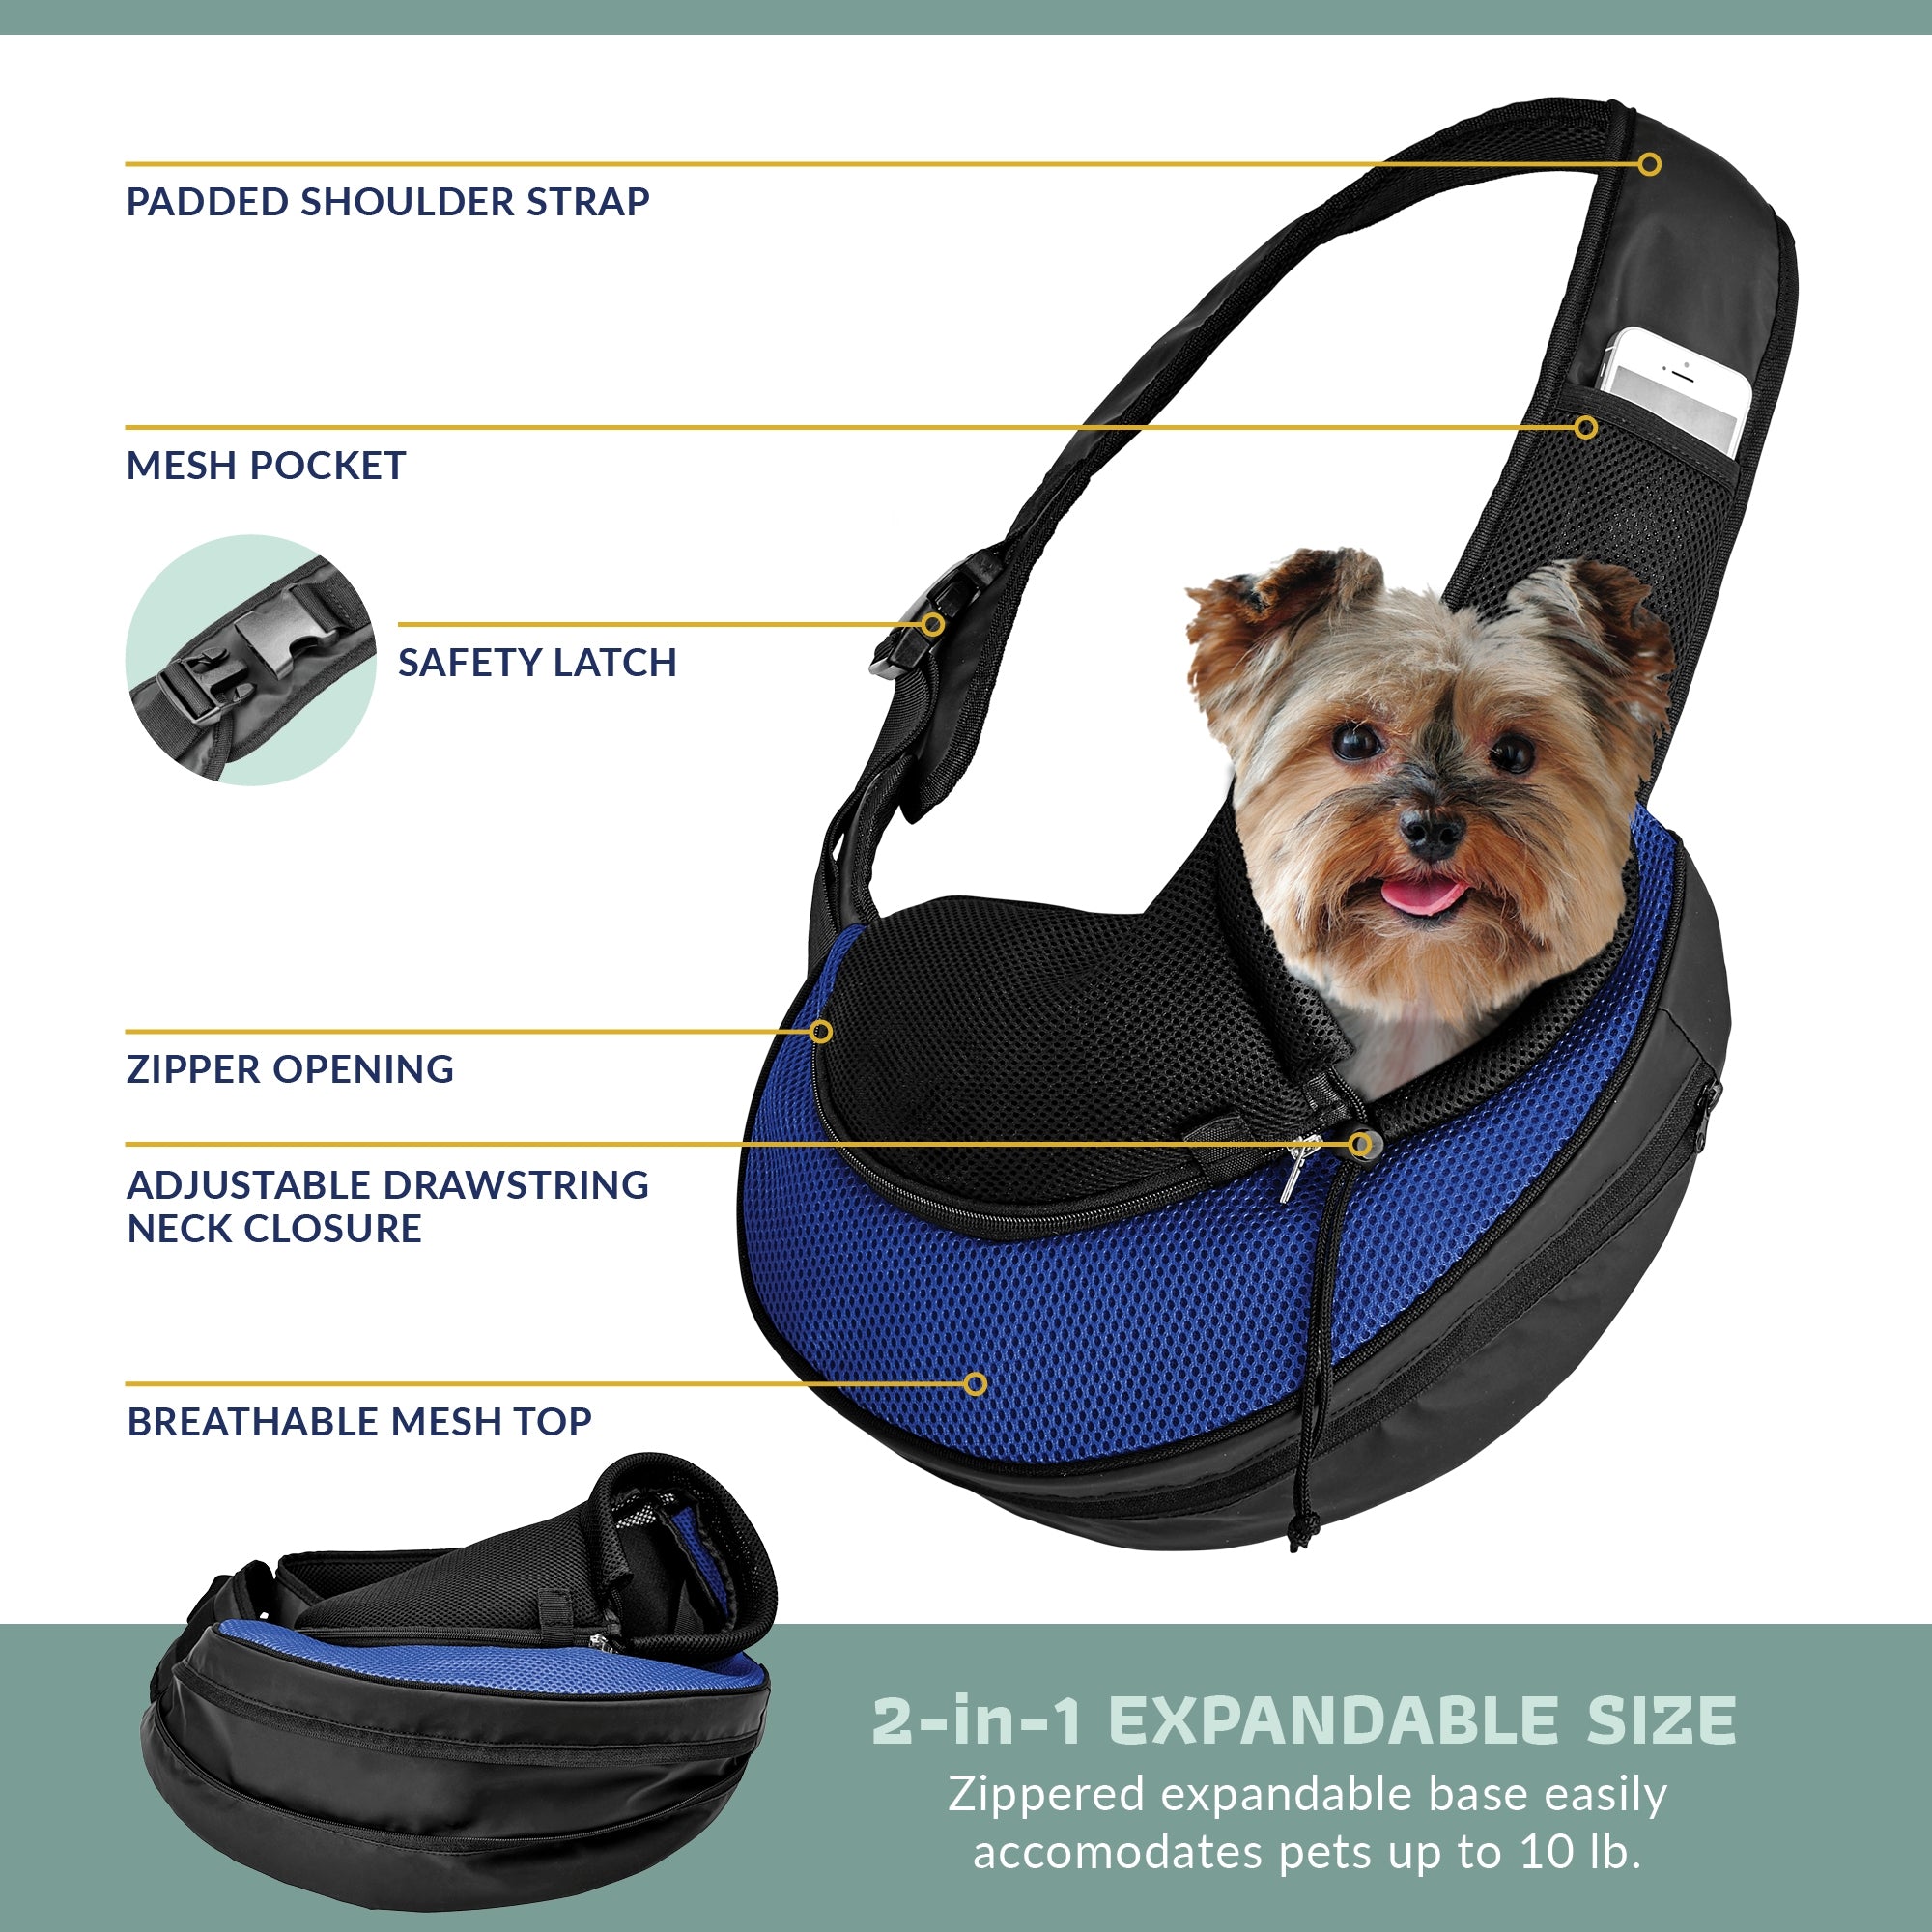 Katziela Expandable Sling Dog & Cat Carrier - Blue